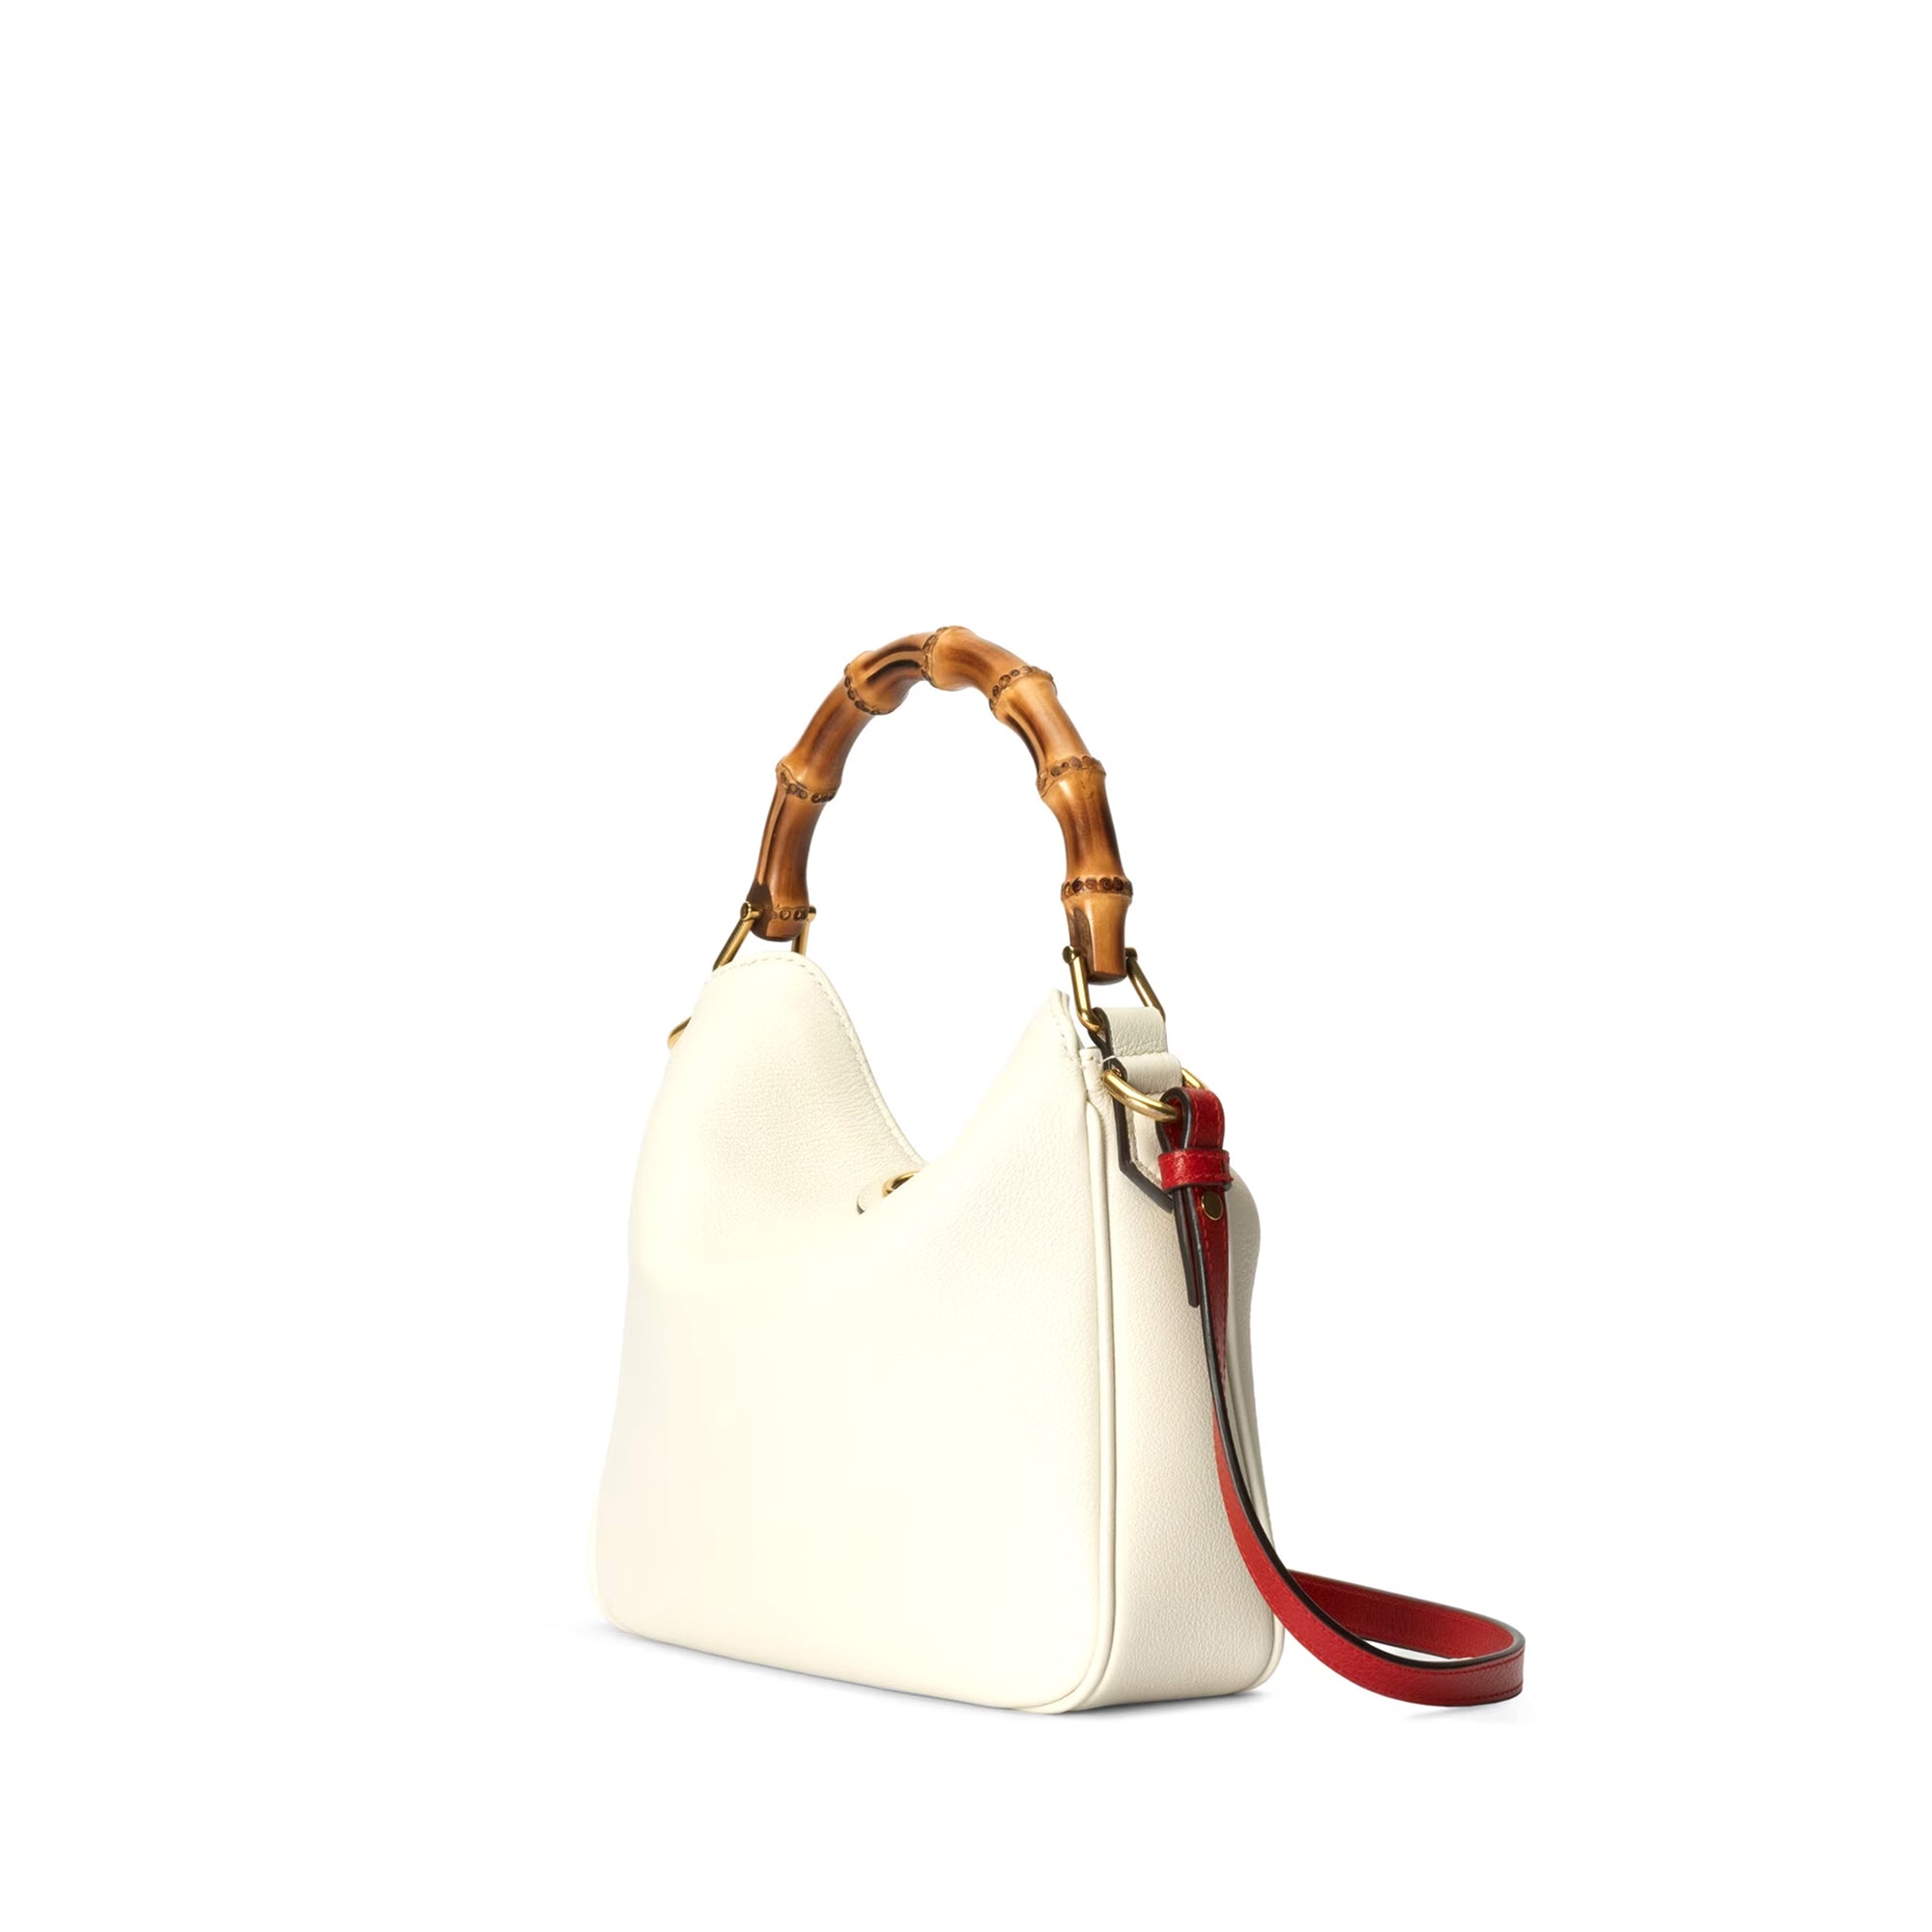 Gucci - Women’s Diana Small Shoulder Bag - (White) view 2